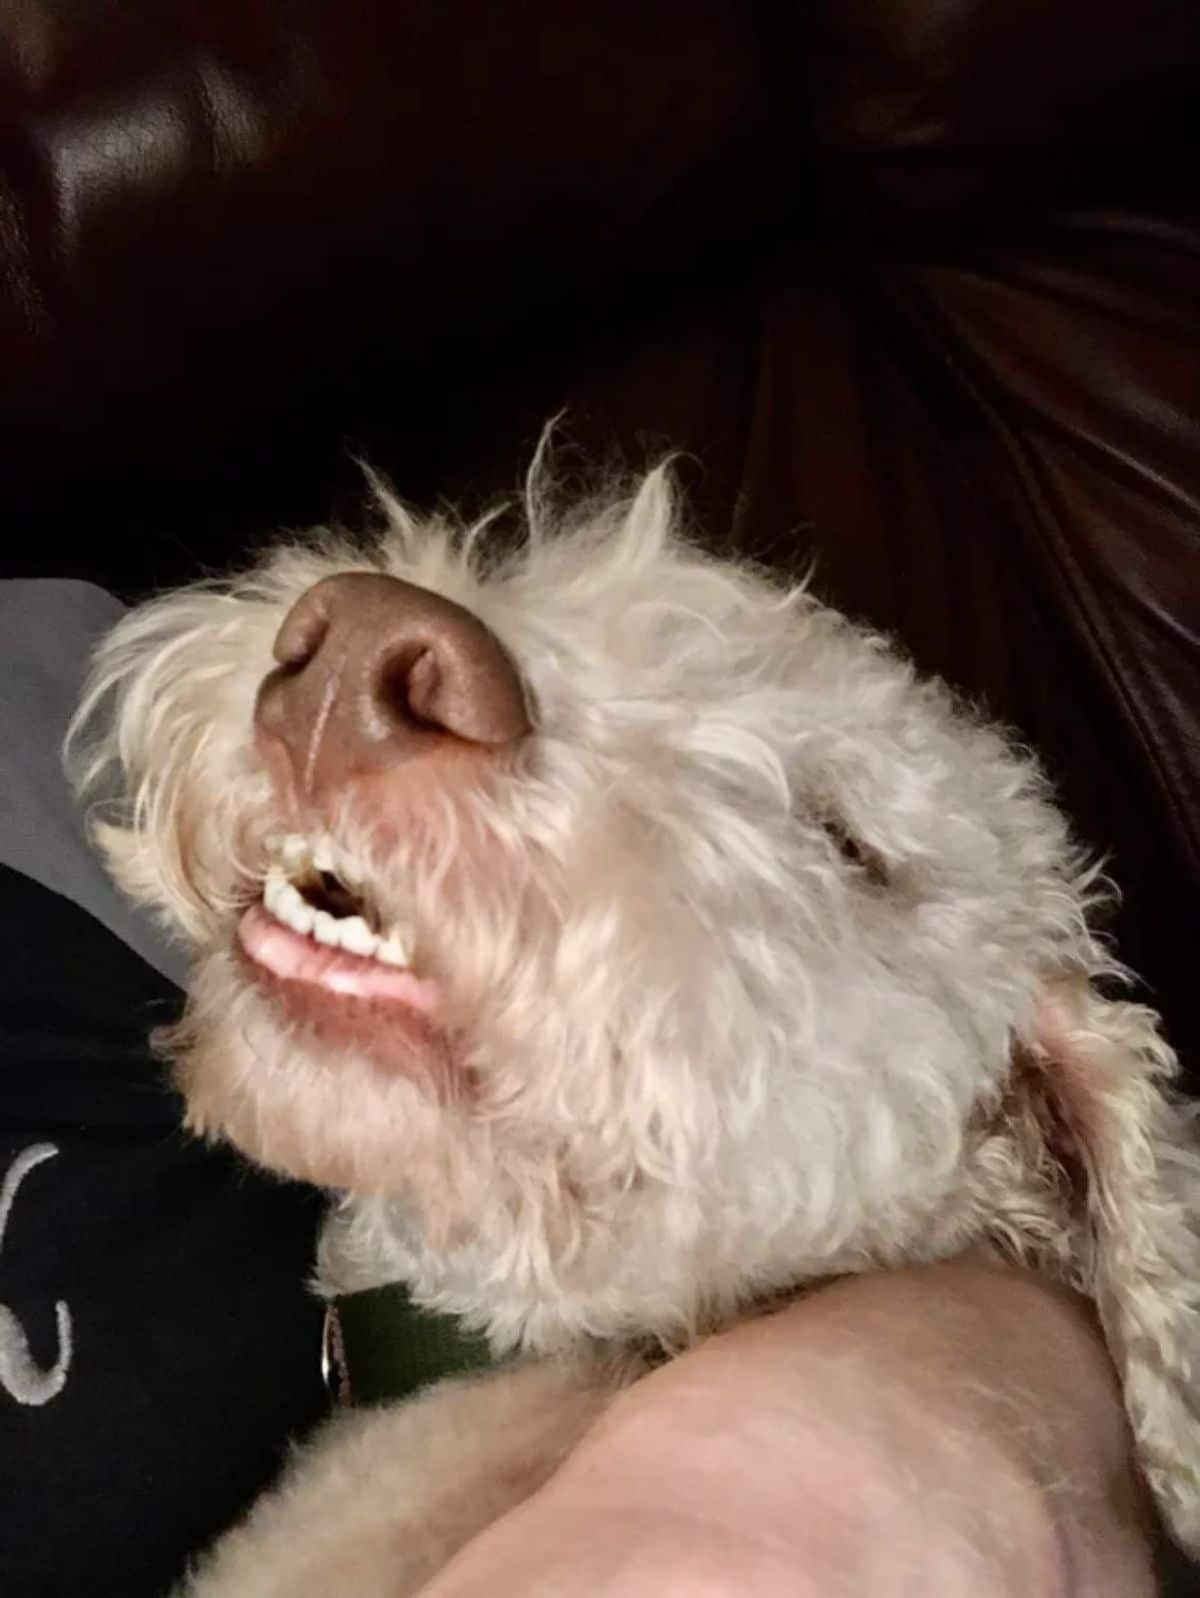 fluffy white sleeping dog's teeth showing